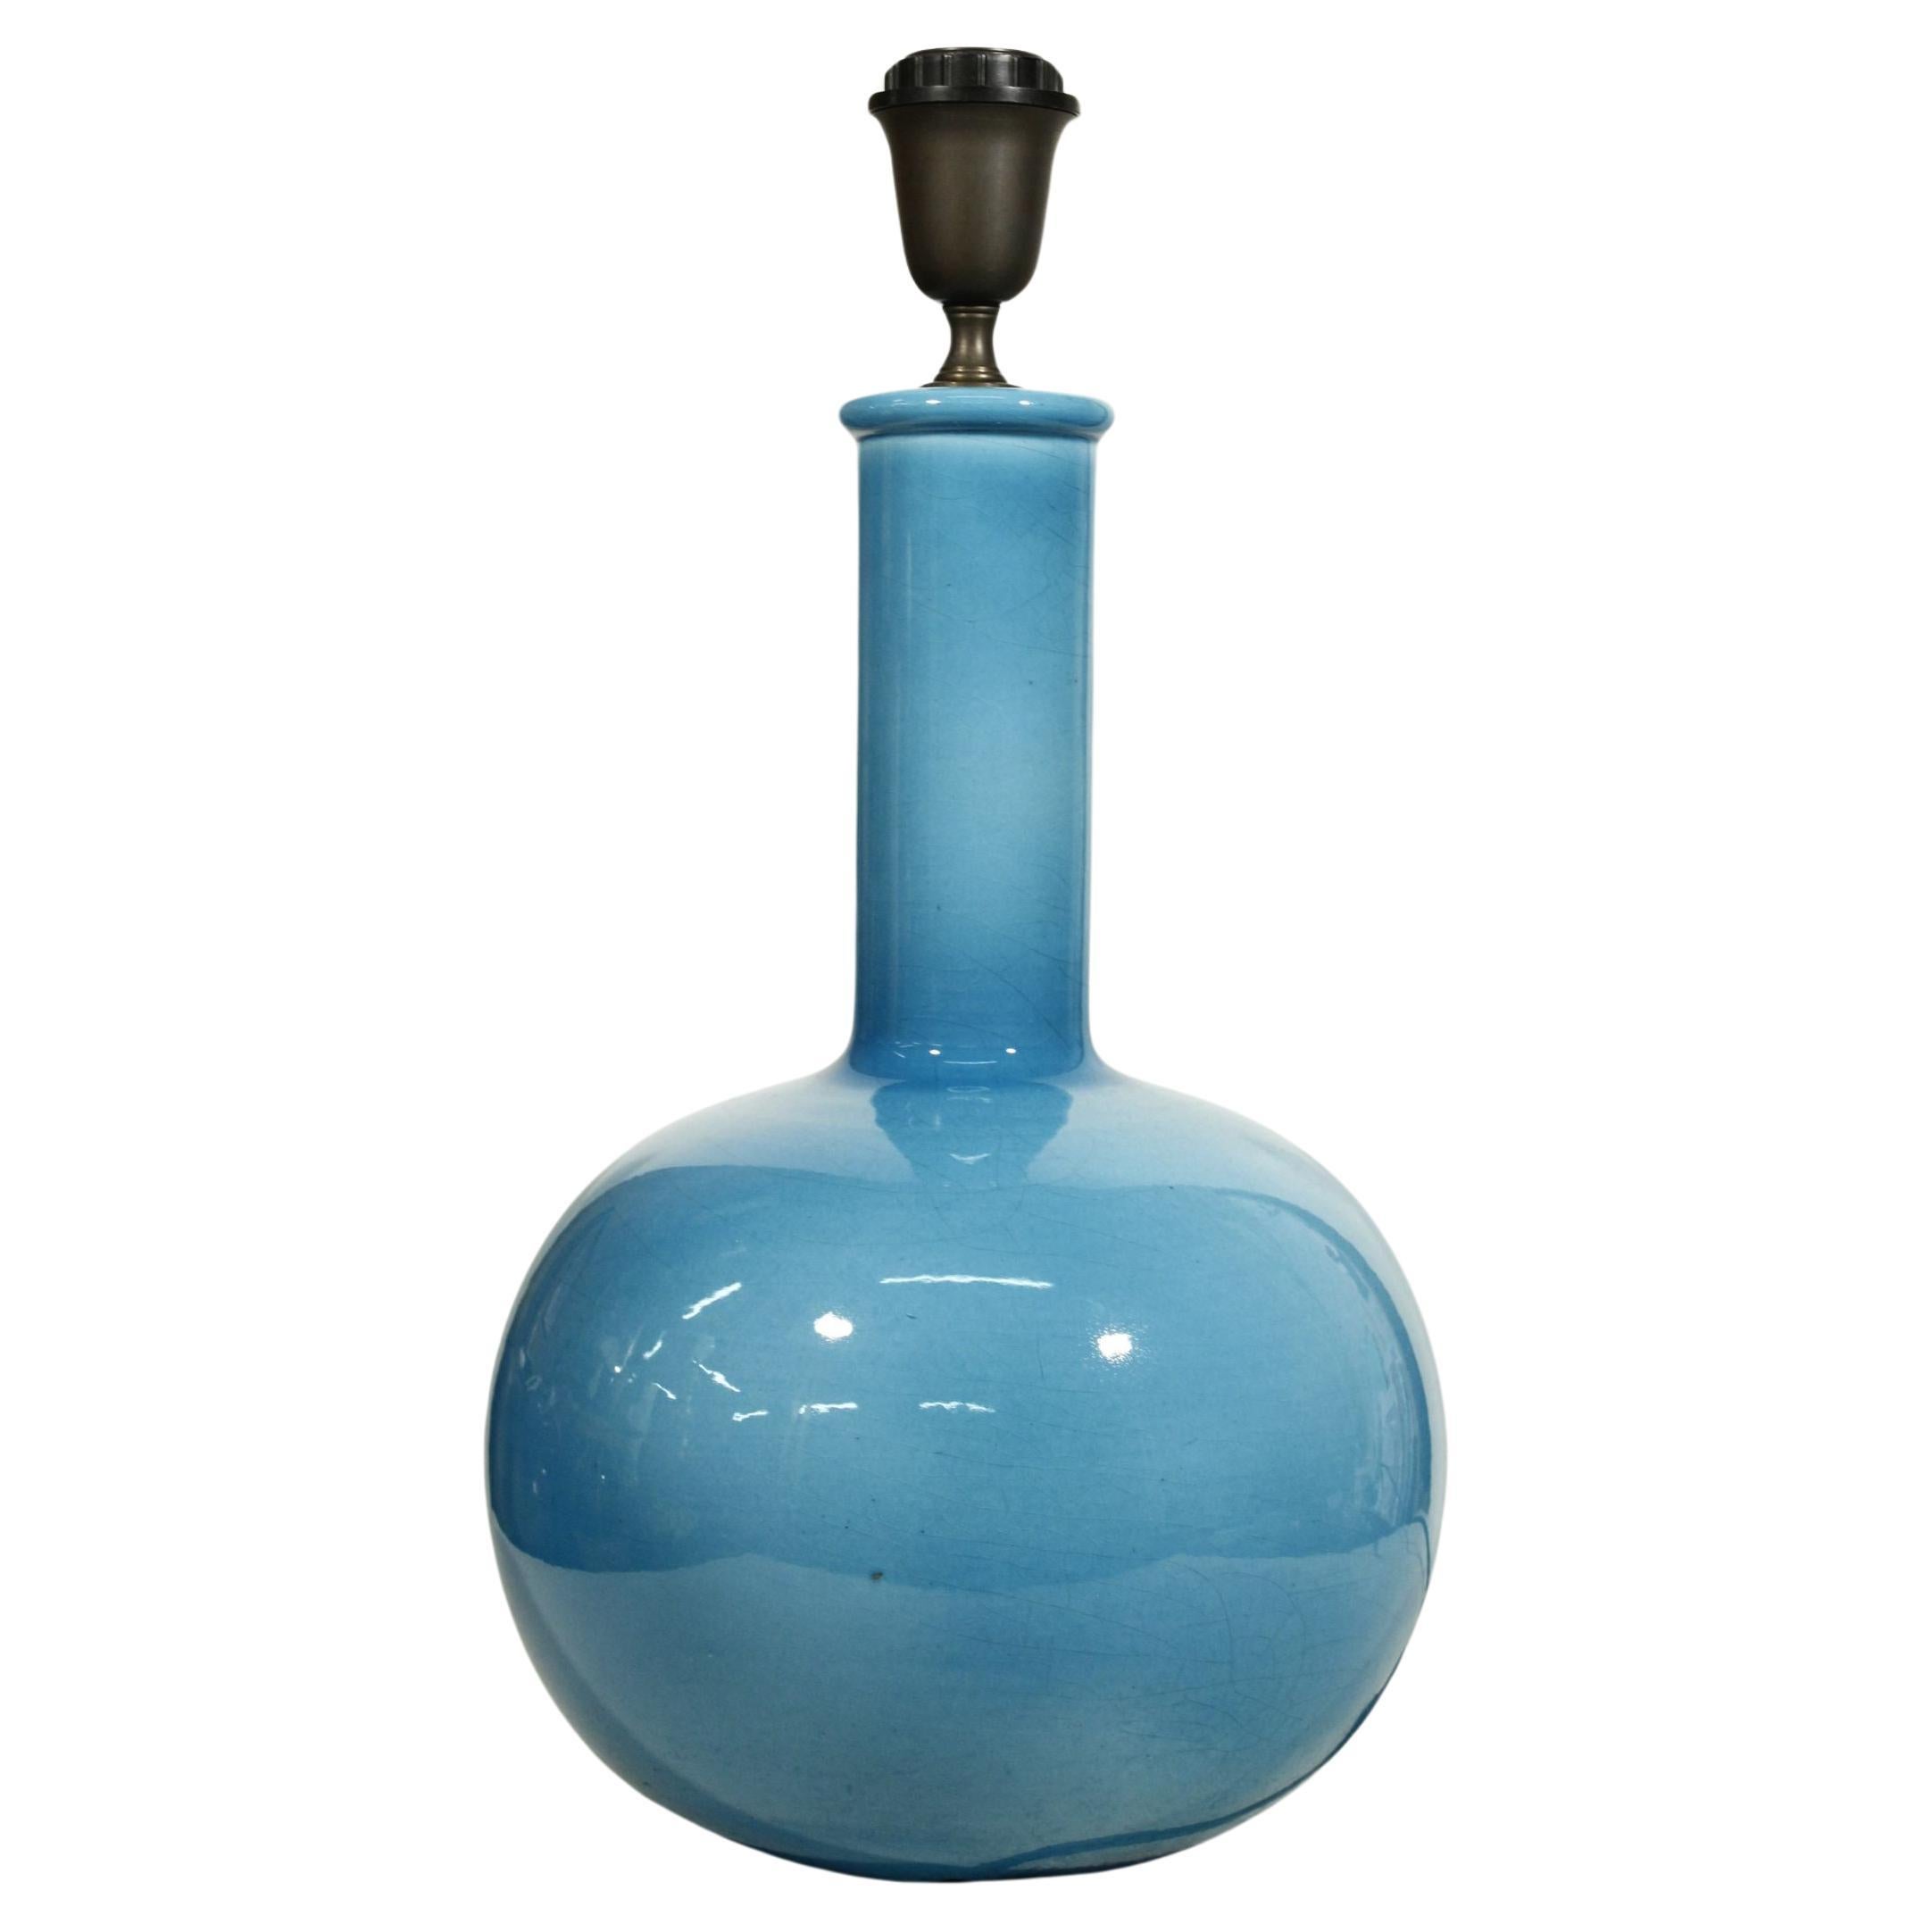 Cerulean blue crackle glaze ceramic lamp base by Alvino Bagni, Italy 1960s For Sale